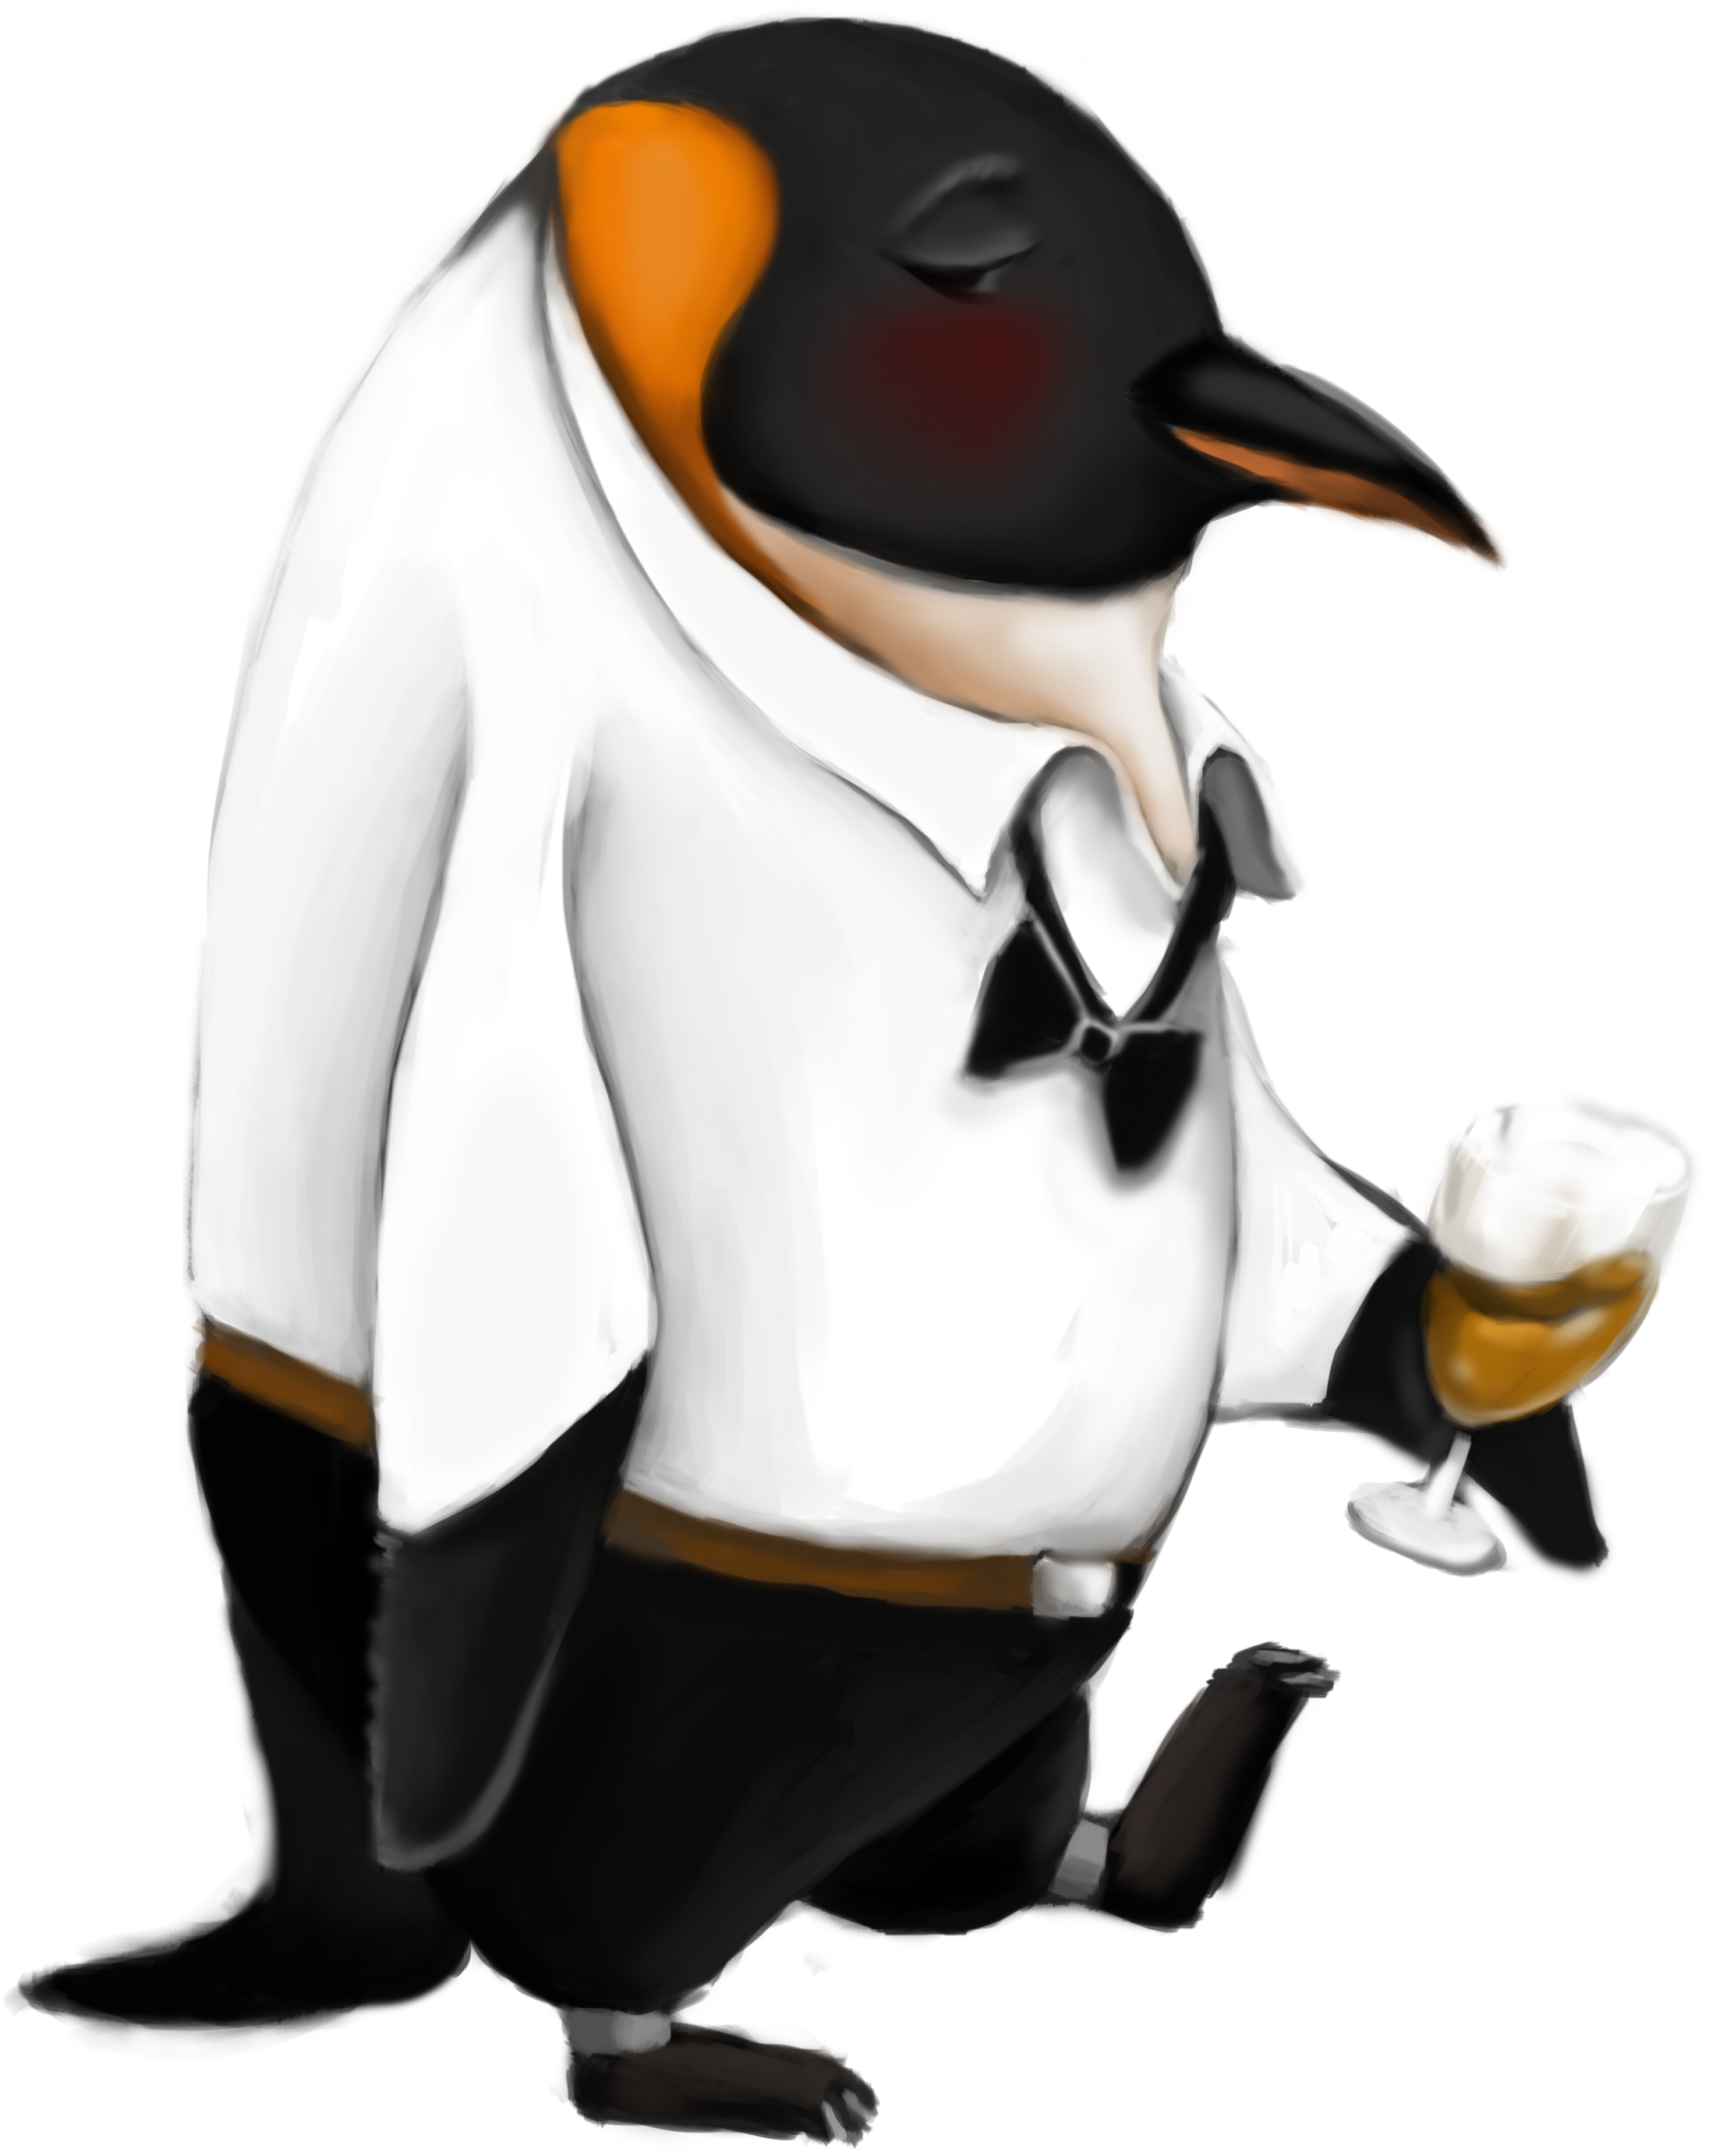 What - King Penguin (4724x2953)